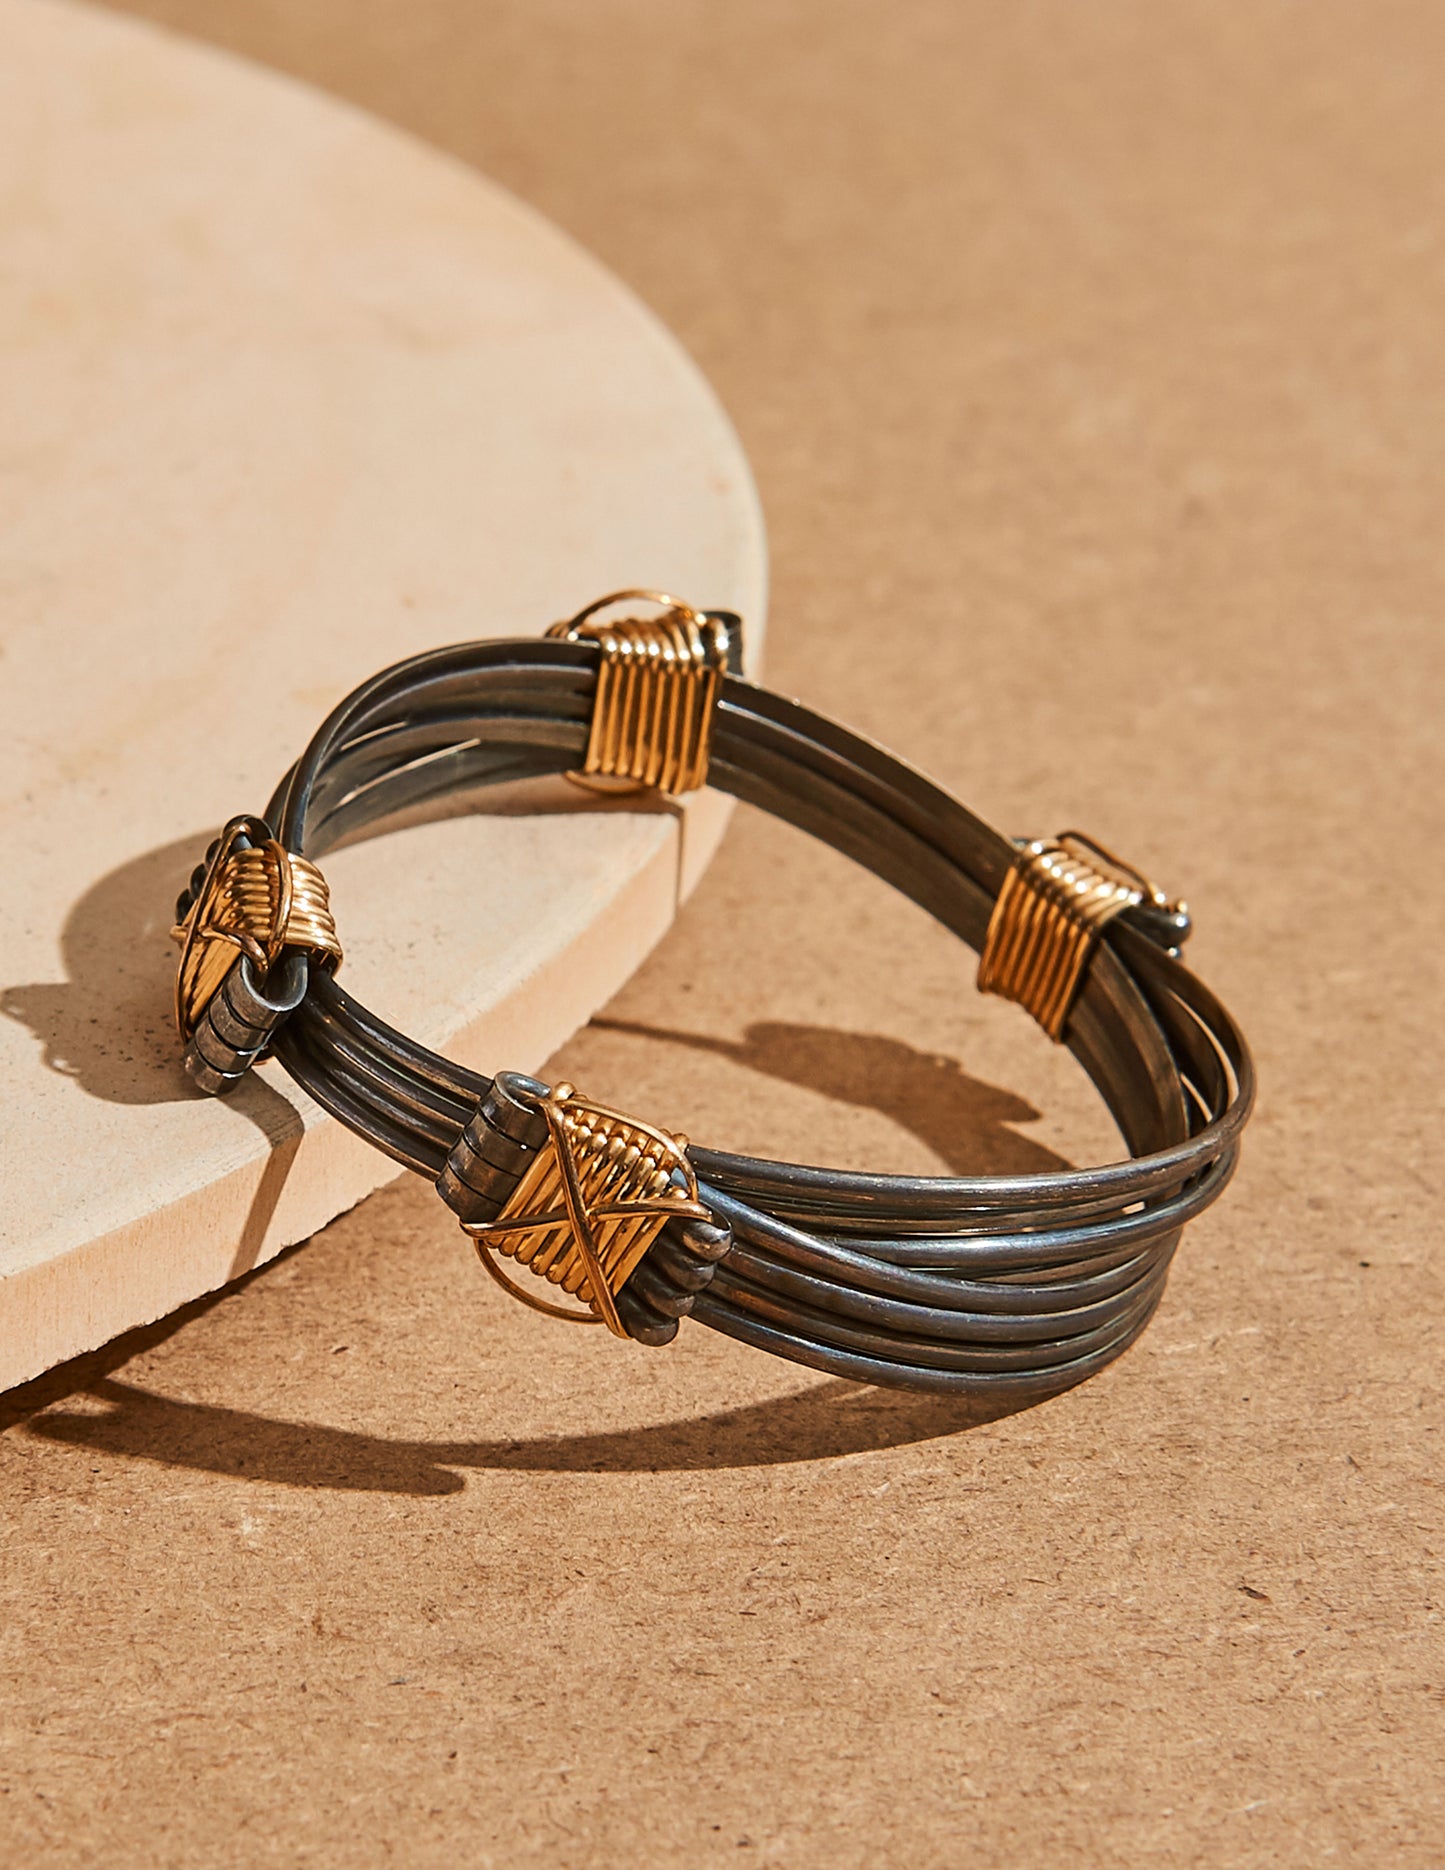 Gold Elephant Hair 4 Knot Bracelets | Quality elephant hair knot bracelets /bangles